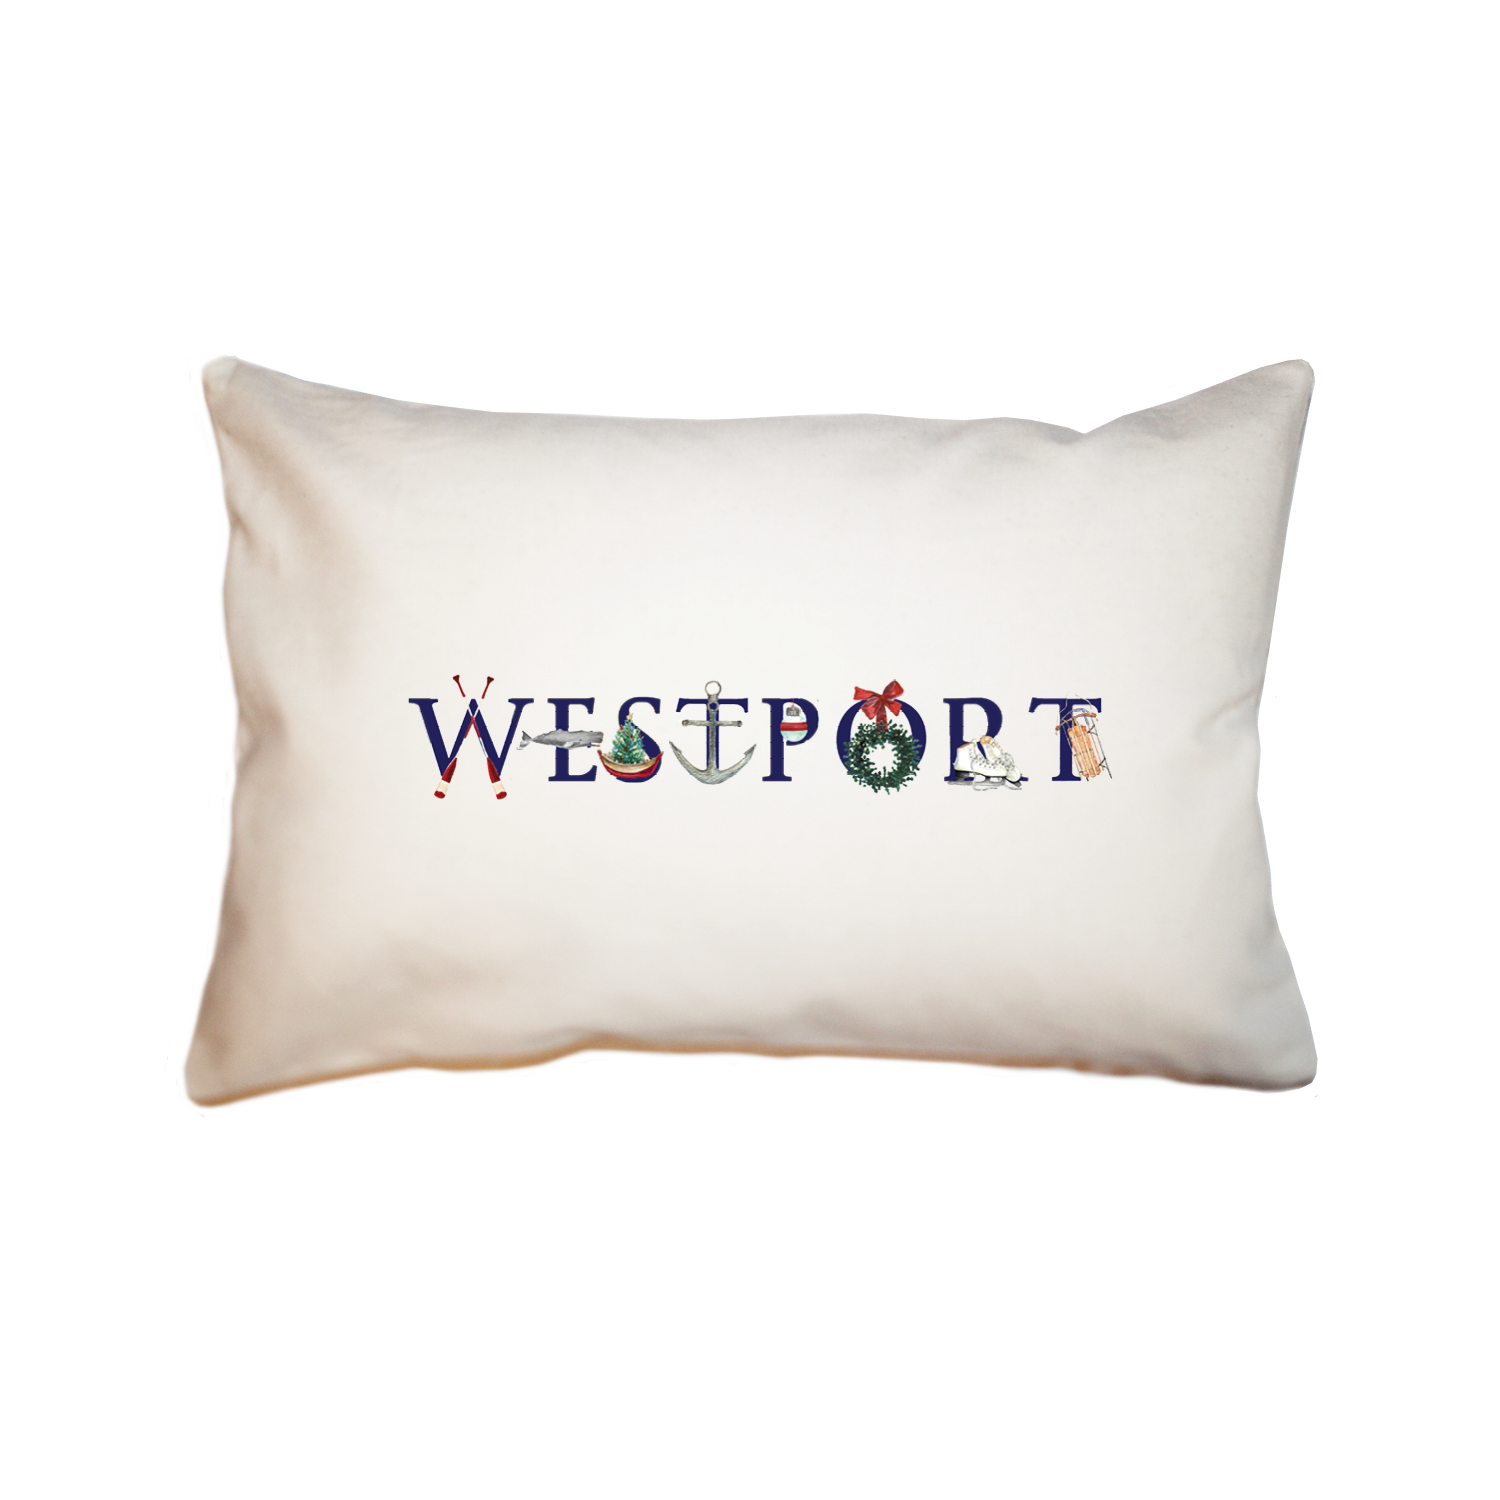 Westport winter large rectangle pillow